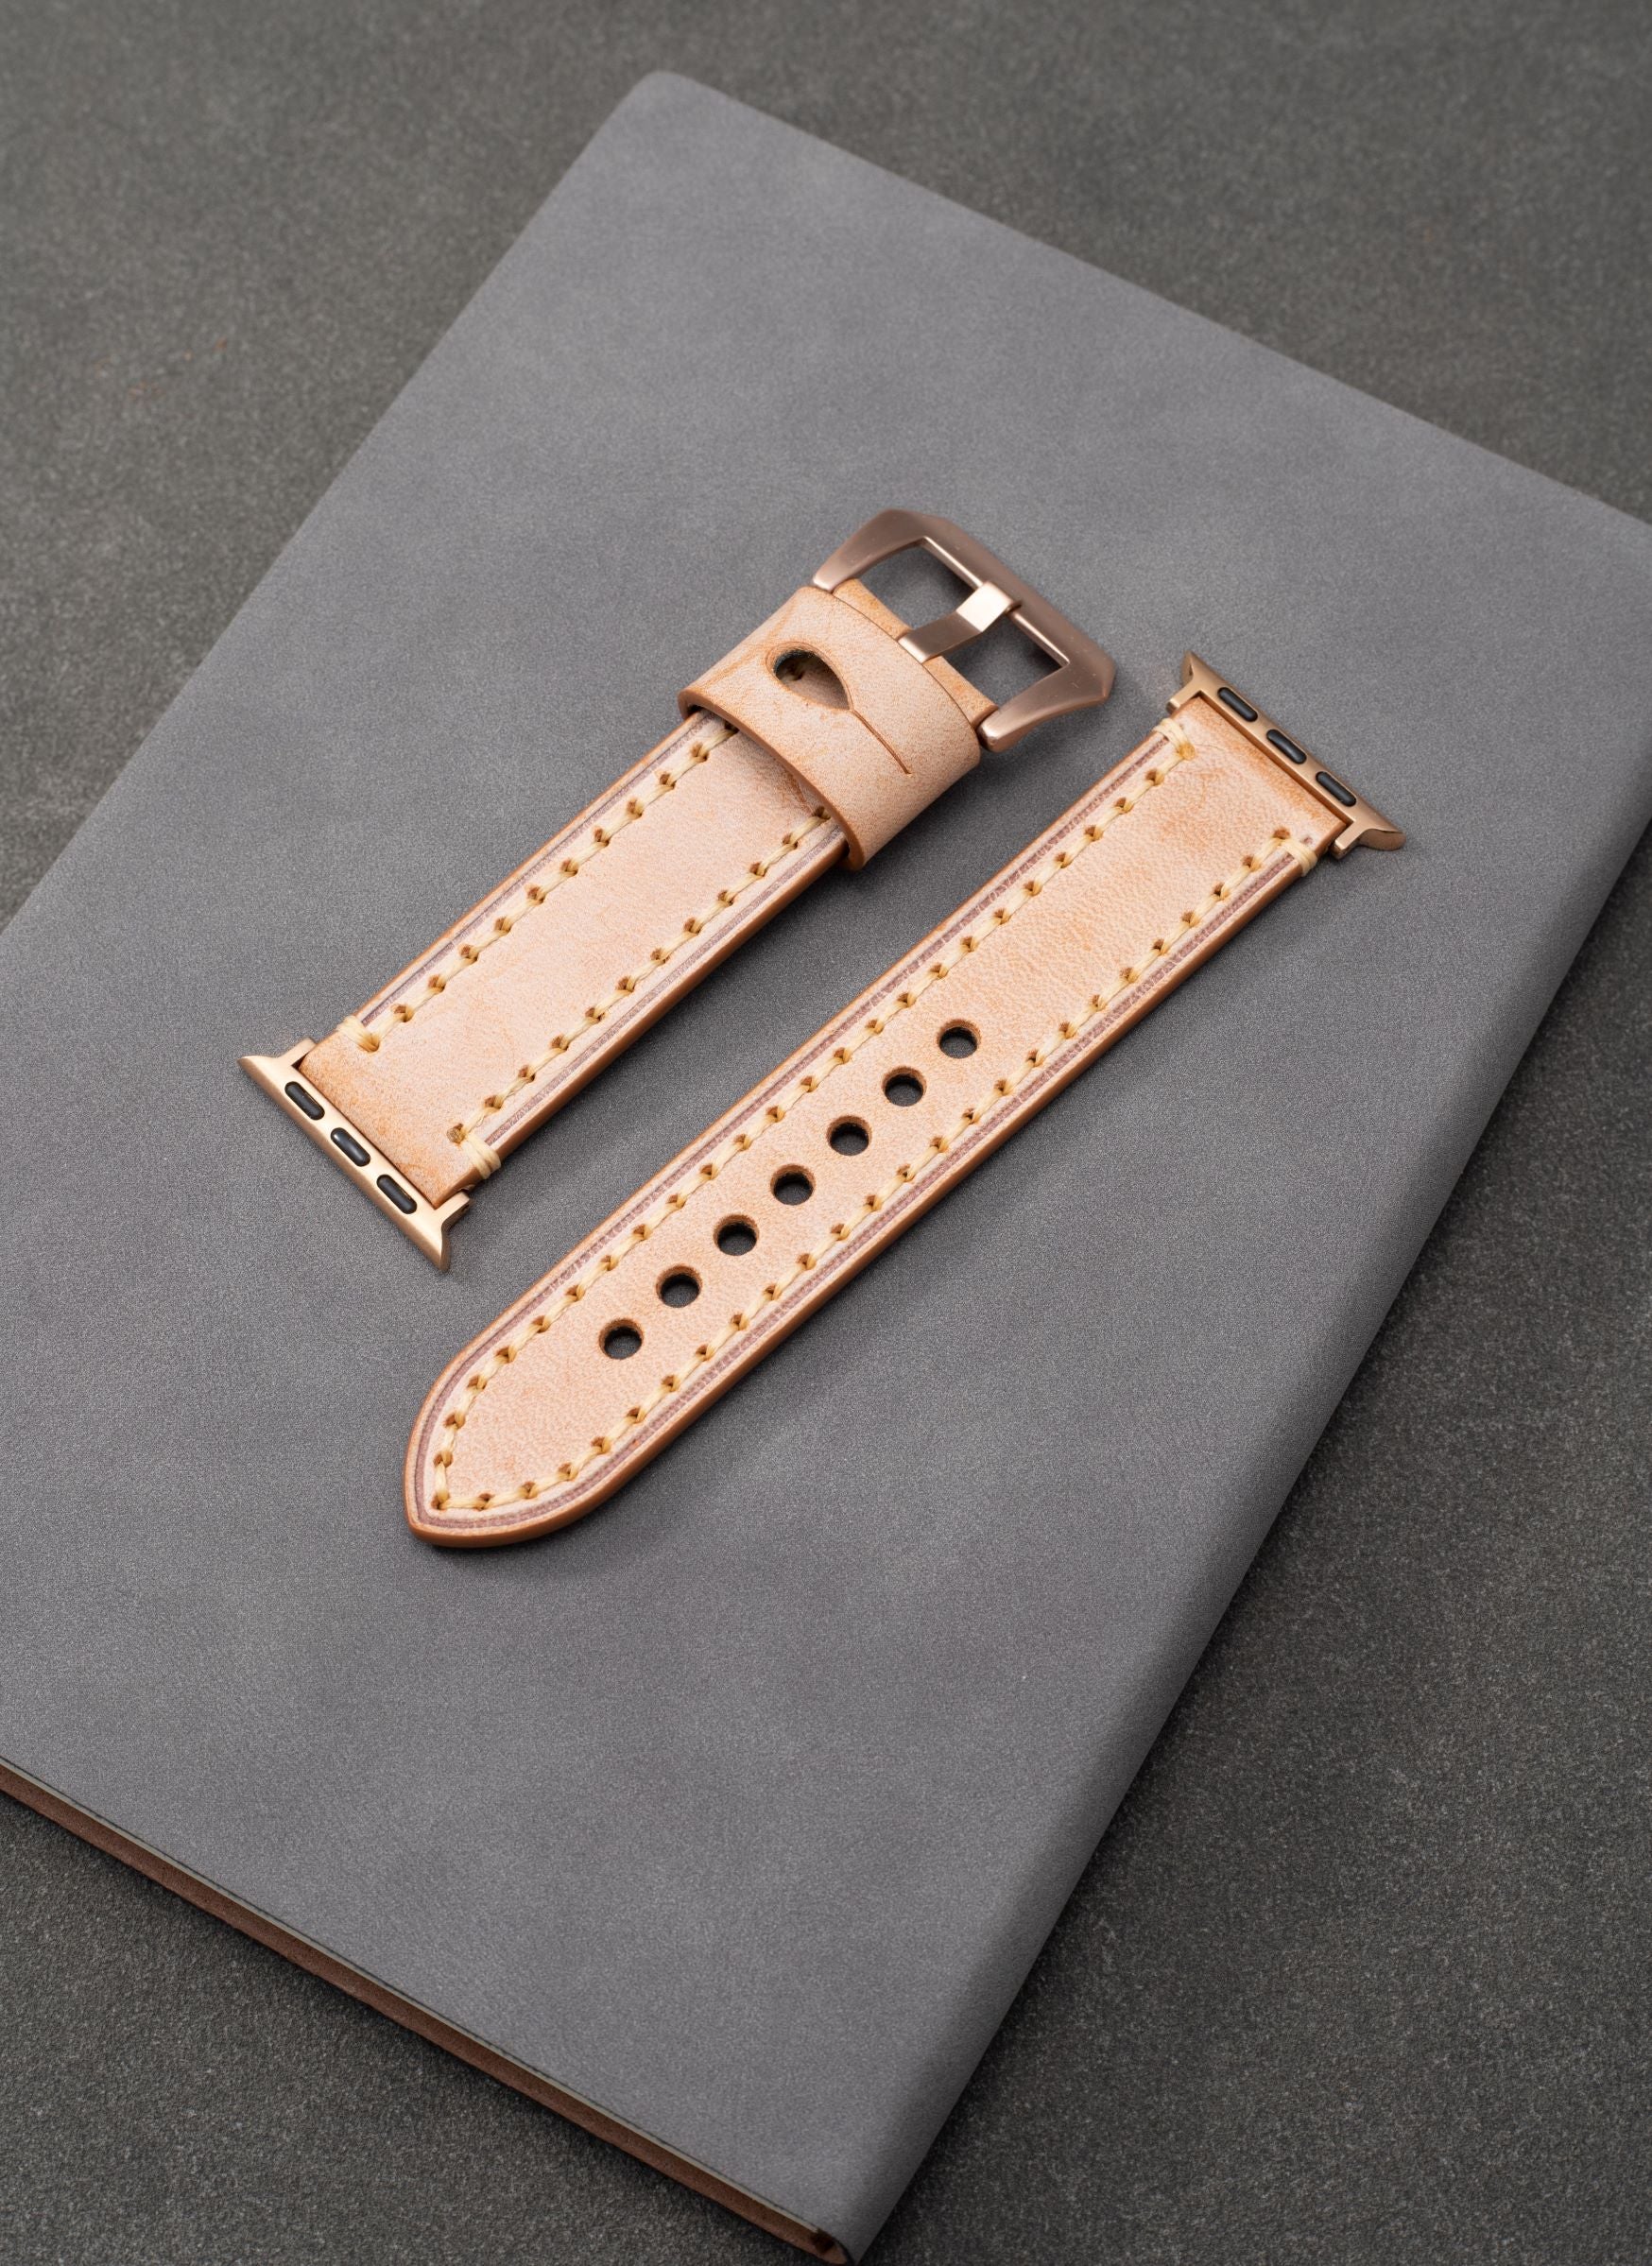 Designer Fashionable Apple Watch Band